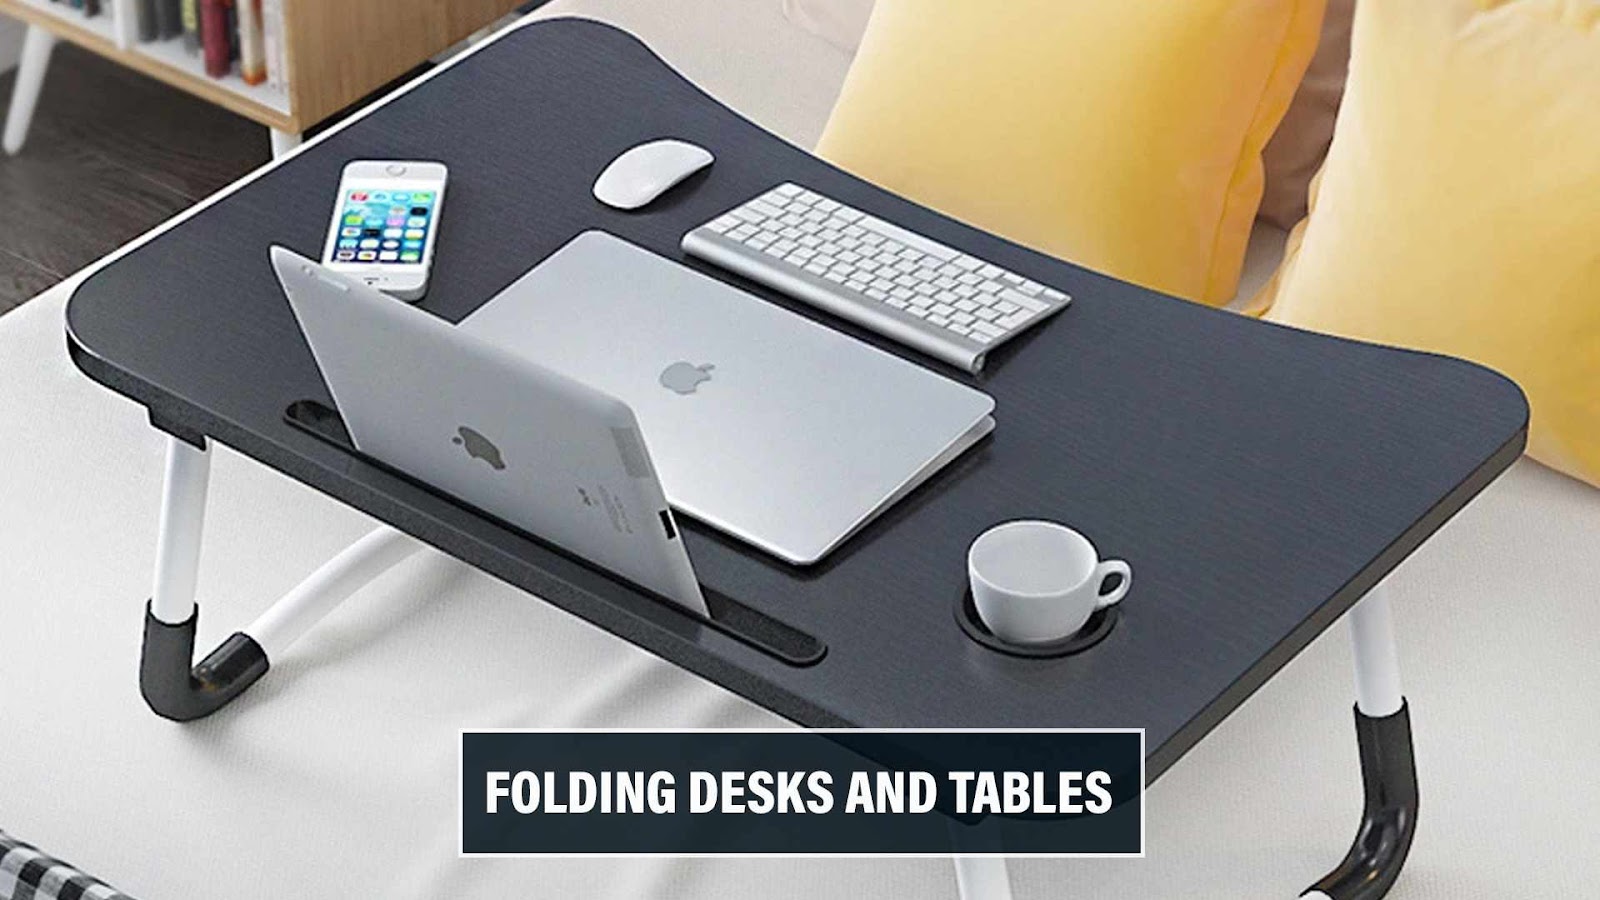 Folding Desks and Tables: 